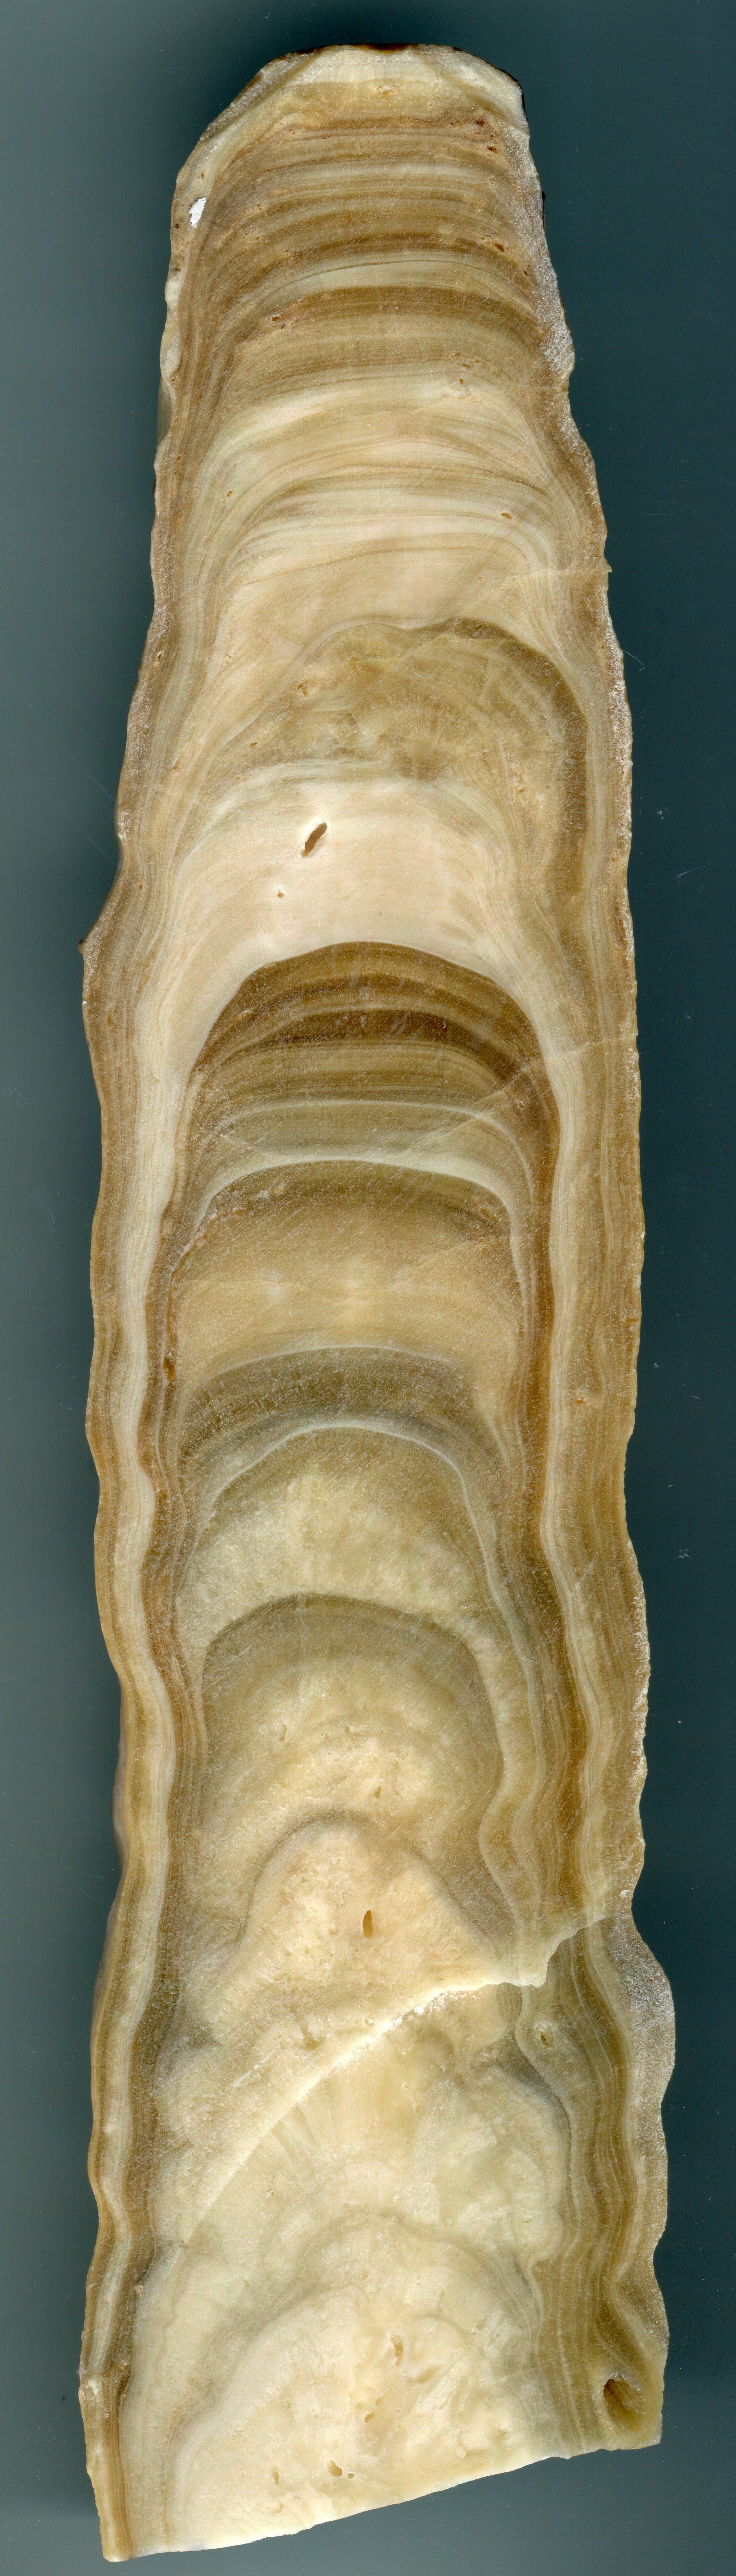 Speleothem growth layers